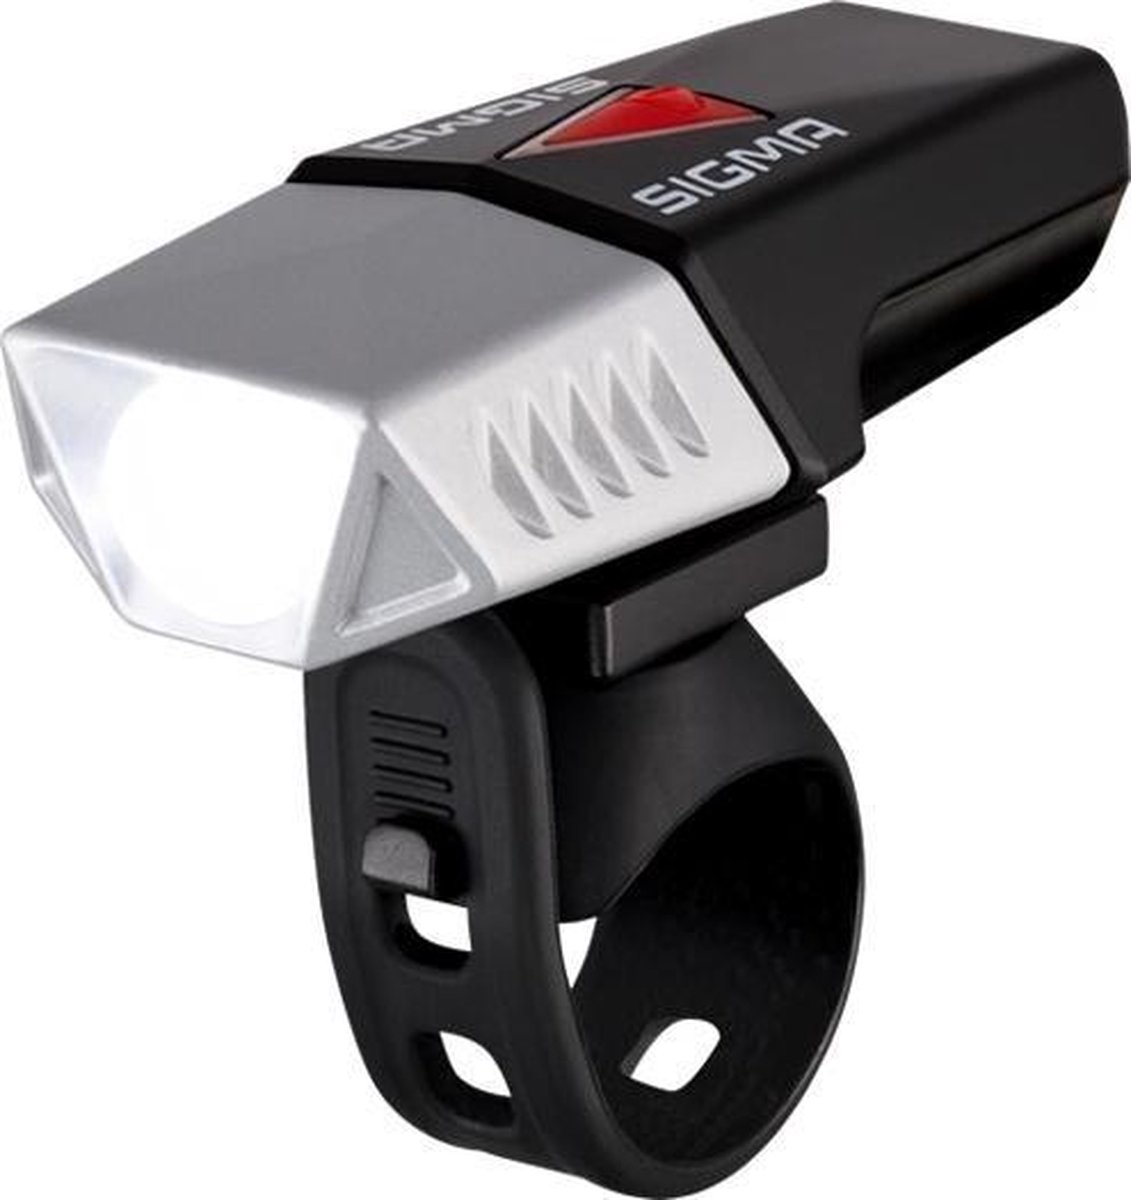 Sigma Buster 600 HL - Koplamp Fiets - 600 Lumen - LED - USB - Geint. accu - Siliconenhouder - Zwart/zilver